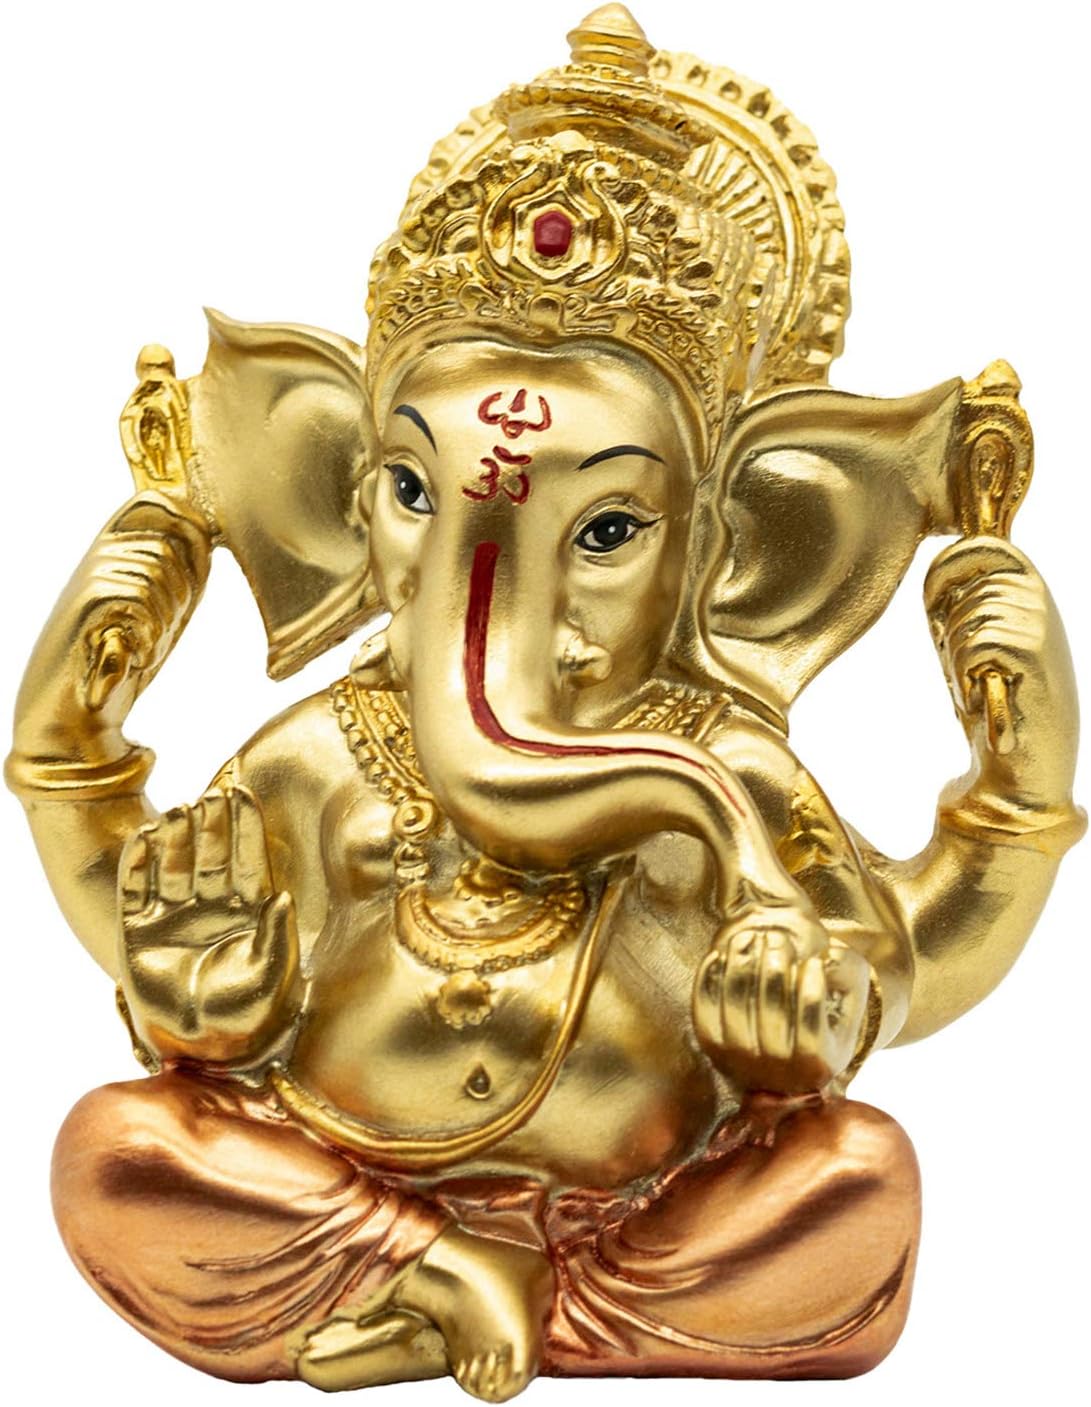 Hindu Lord Ganesha Sculpture - Indian Religious Elephant Buddha Ganesh Statue Decoration - India Home Pooja Murti Temple Accessories Handmade Wedding Return Gifts